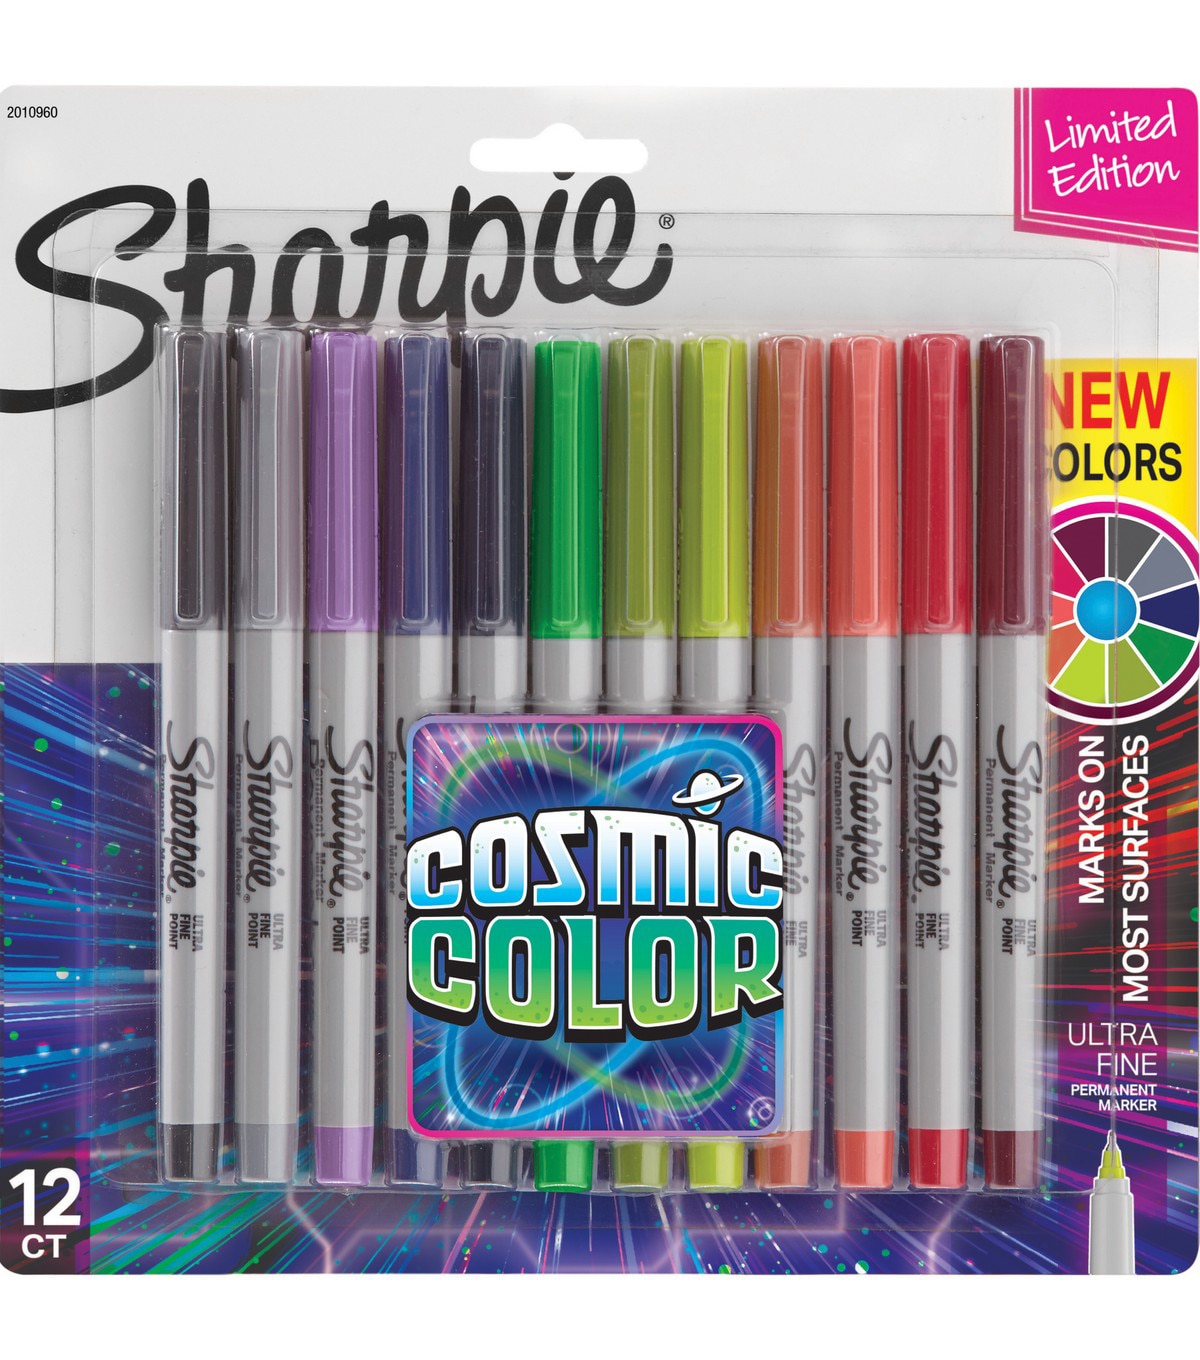 Sharpie Cosmic Color 12 pk Ultra Fine Point Permanent ...